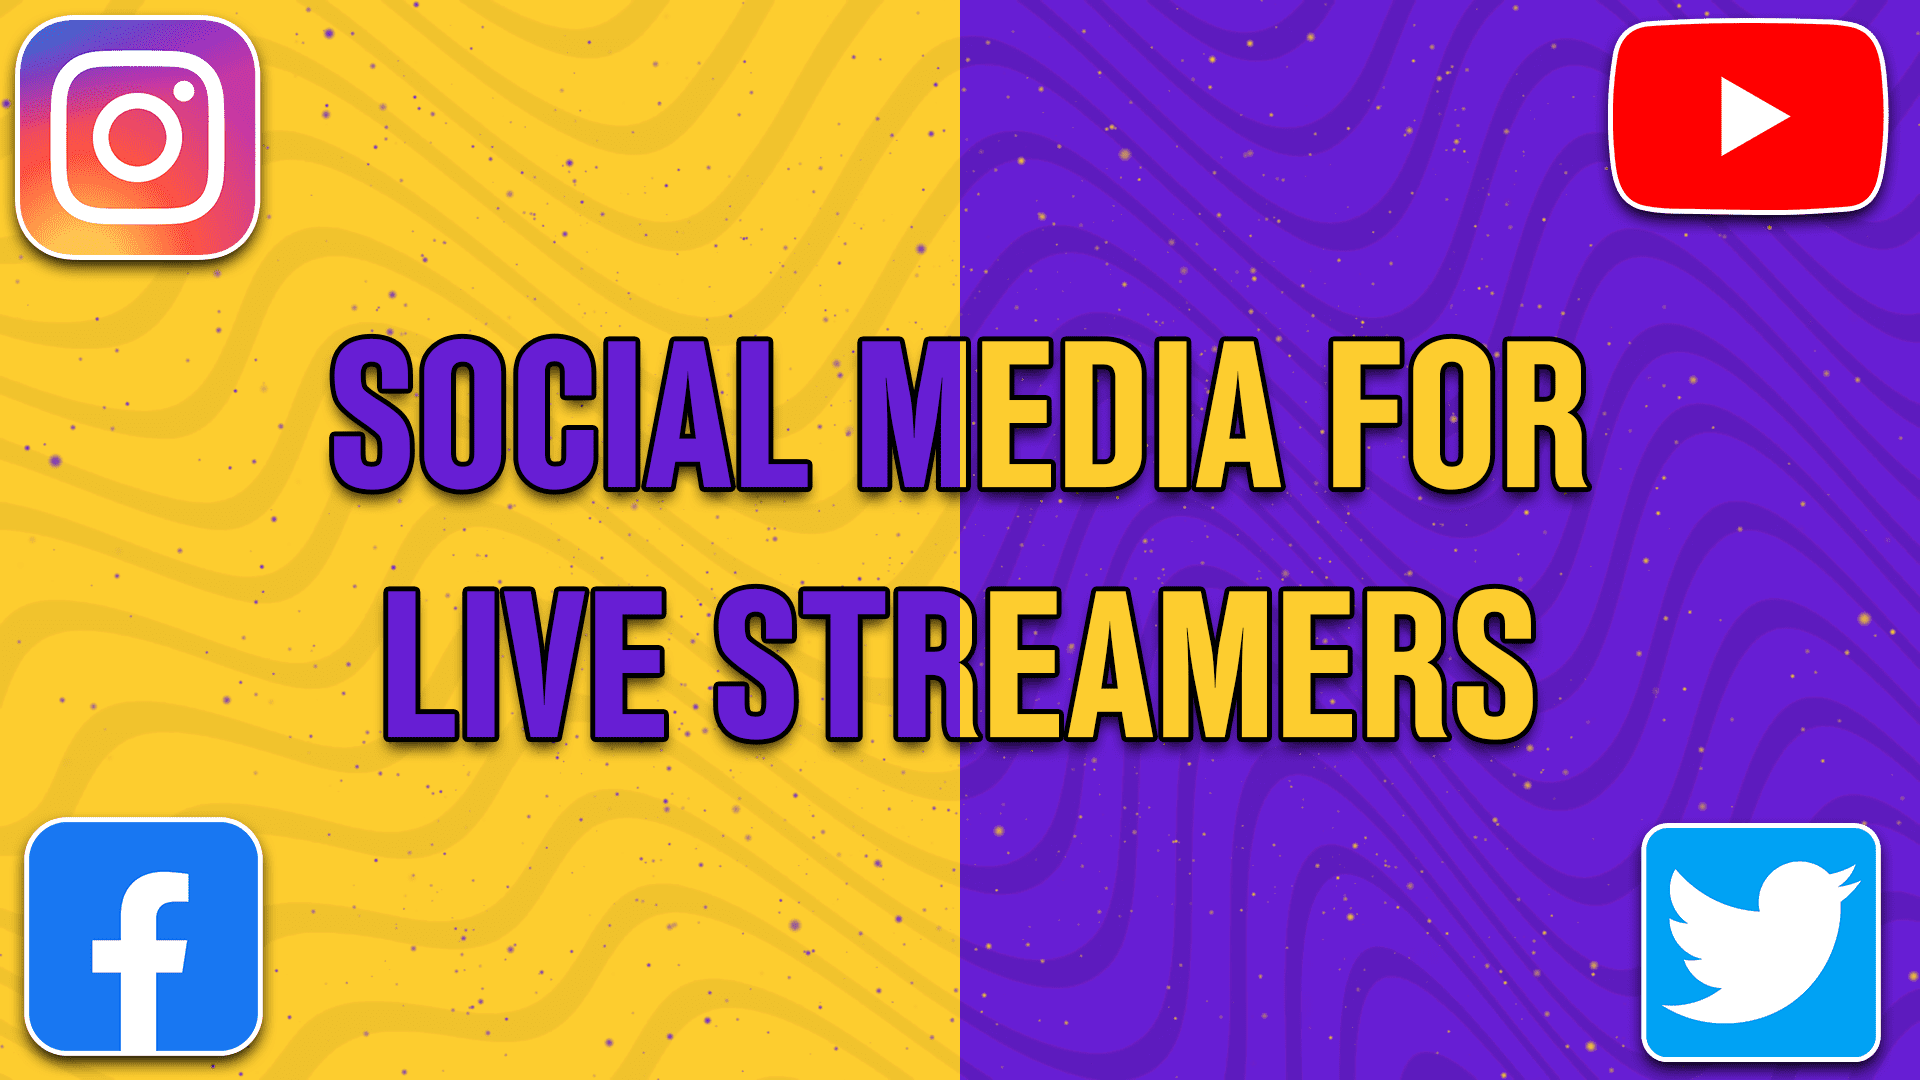 Social media for live streamer - StreamBee